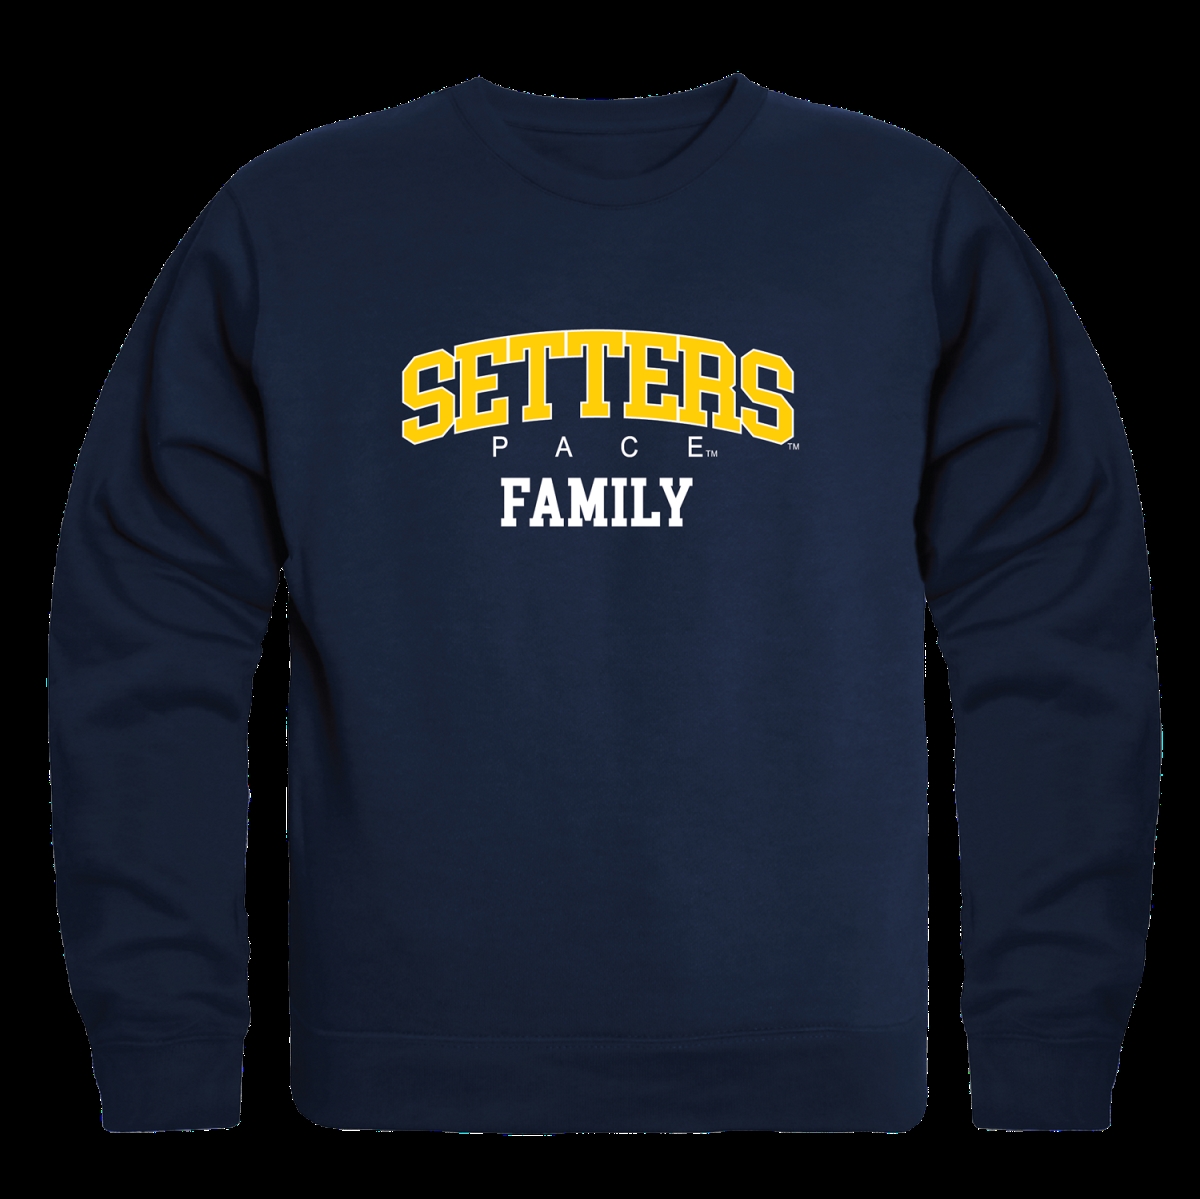 W Republic 572-725-NVY-04 Pace University Setters Family Crewneck Sweatshirt&#44; Navy - Extra Large